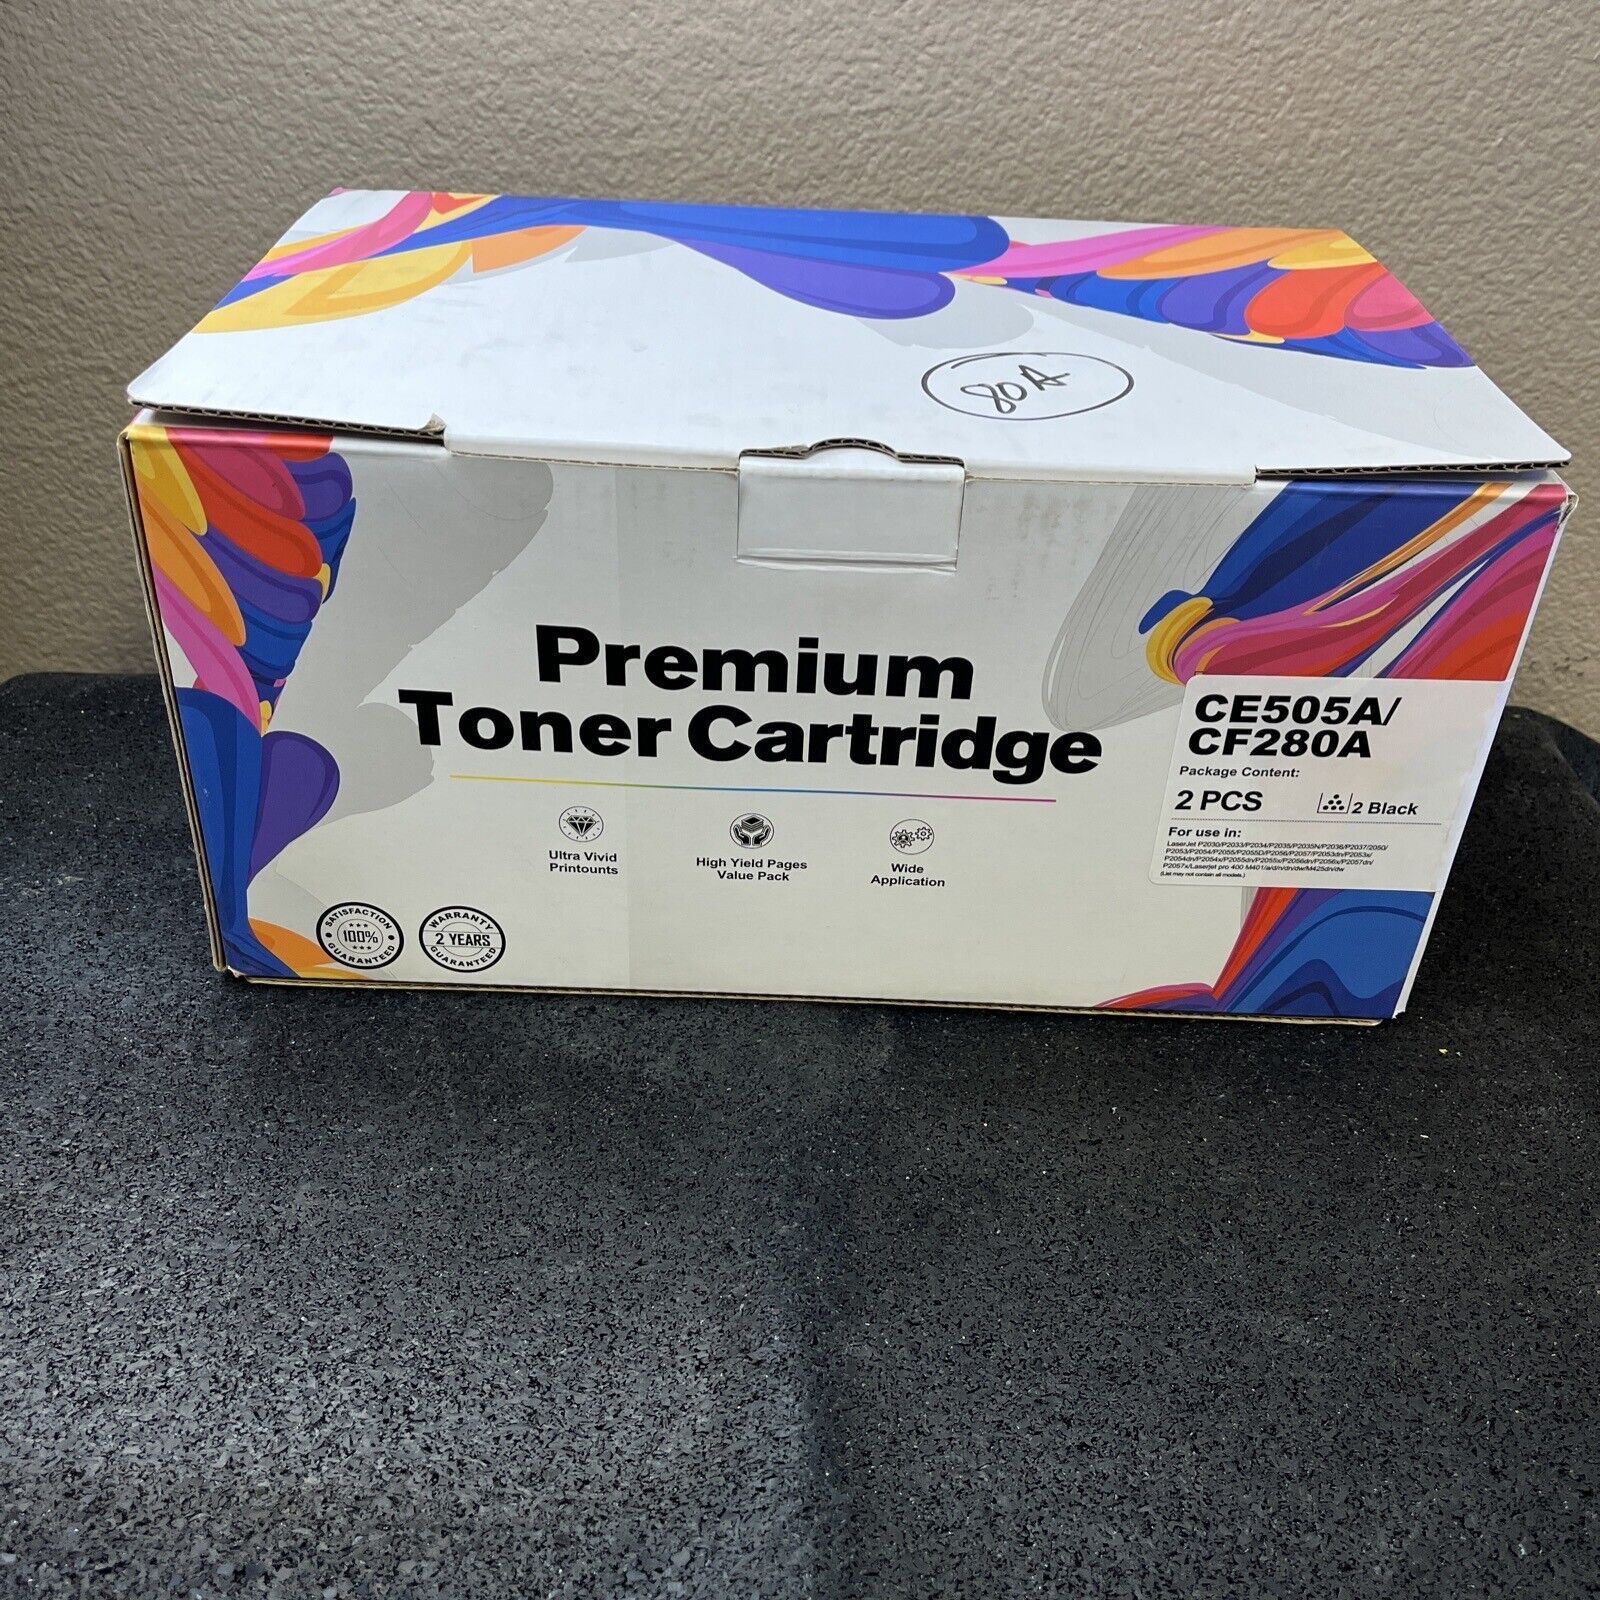 2PK Compatible Toner Cartridge for HP CE505A/CF280A (P2030/P2033/P2034...P2057x)